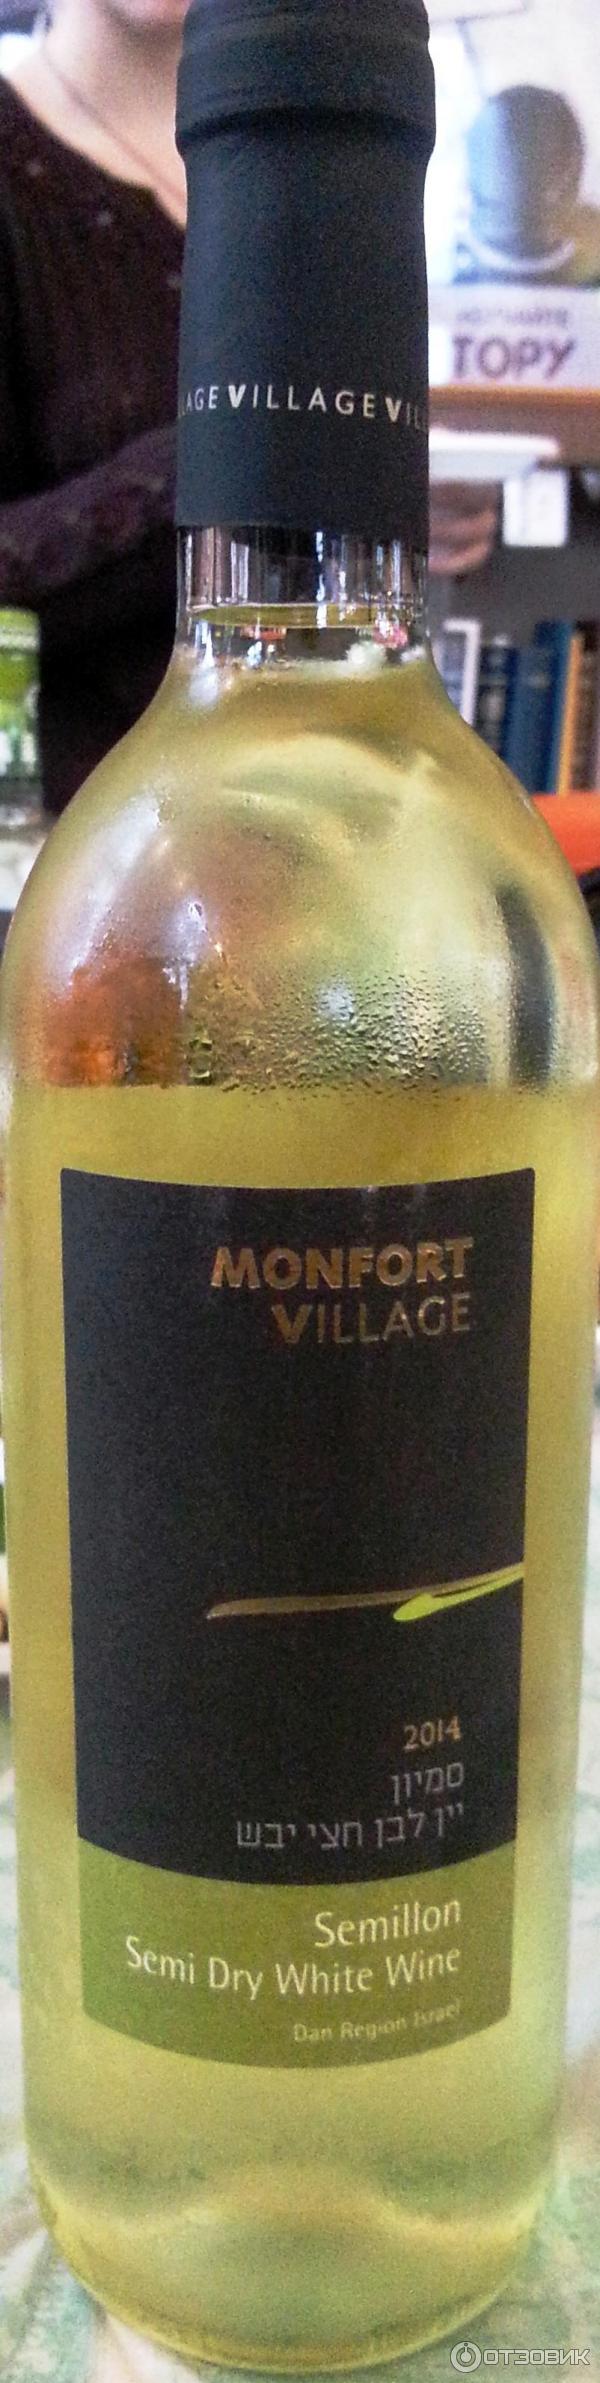 Village вино. Вино Семийон Монфорт. Semillon Monfort вино. Вино Баркан Монфорт. Monfort Village вино.